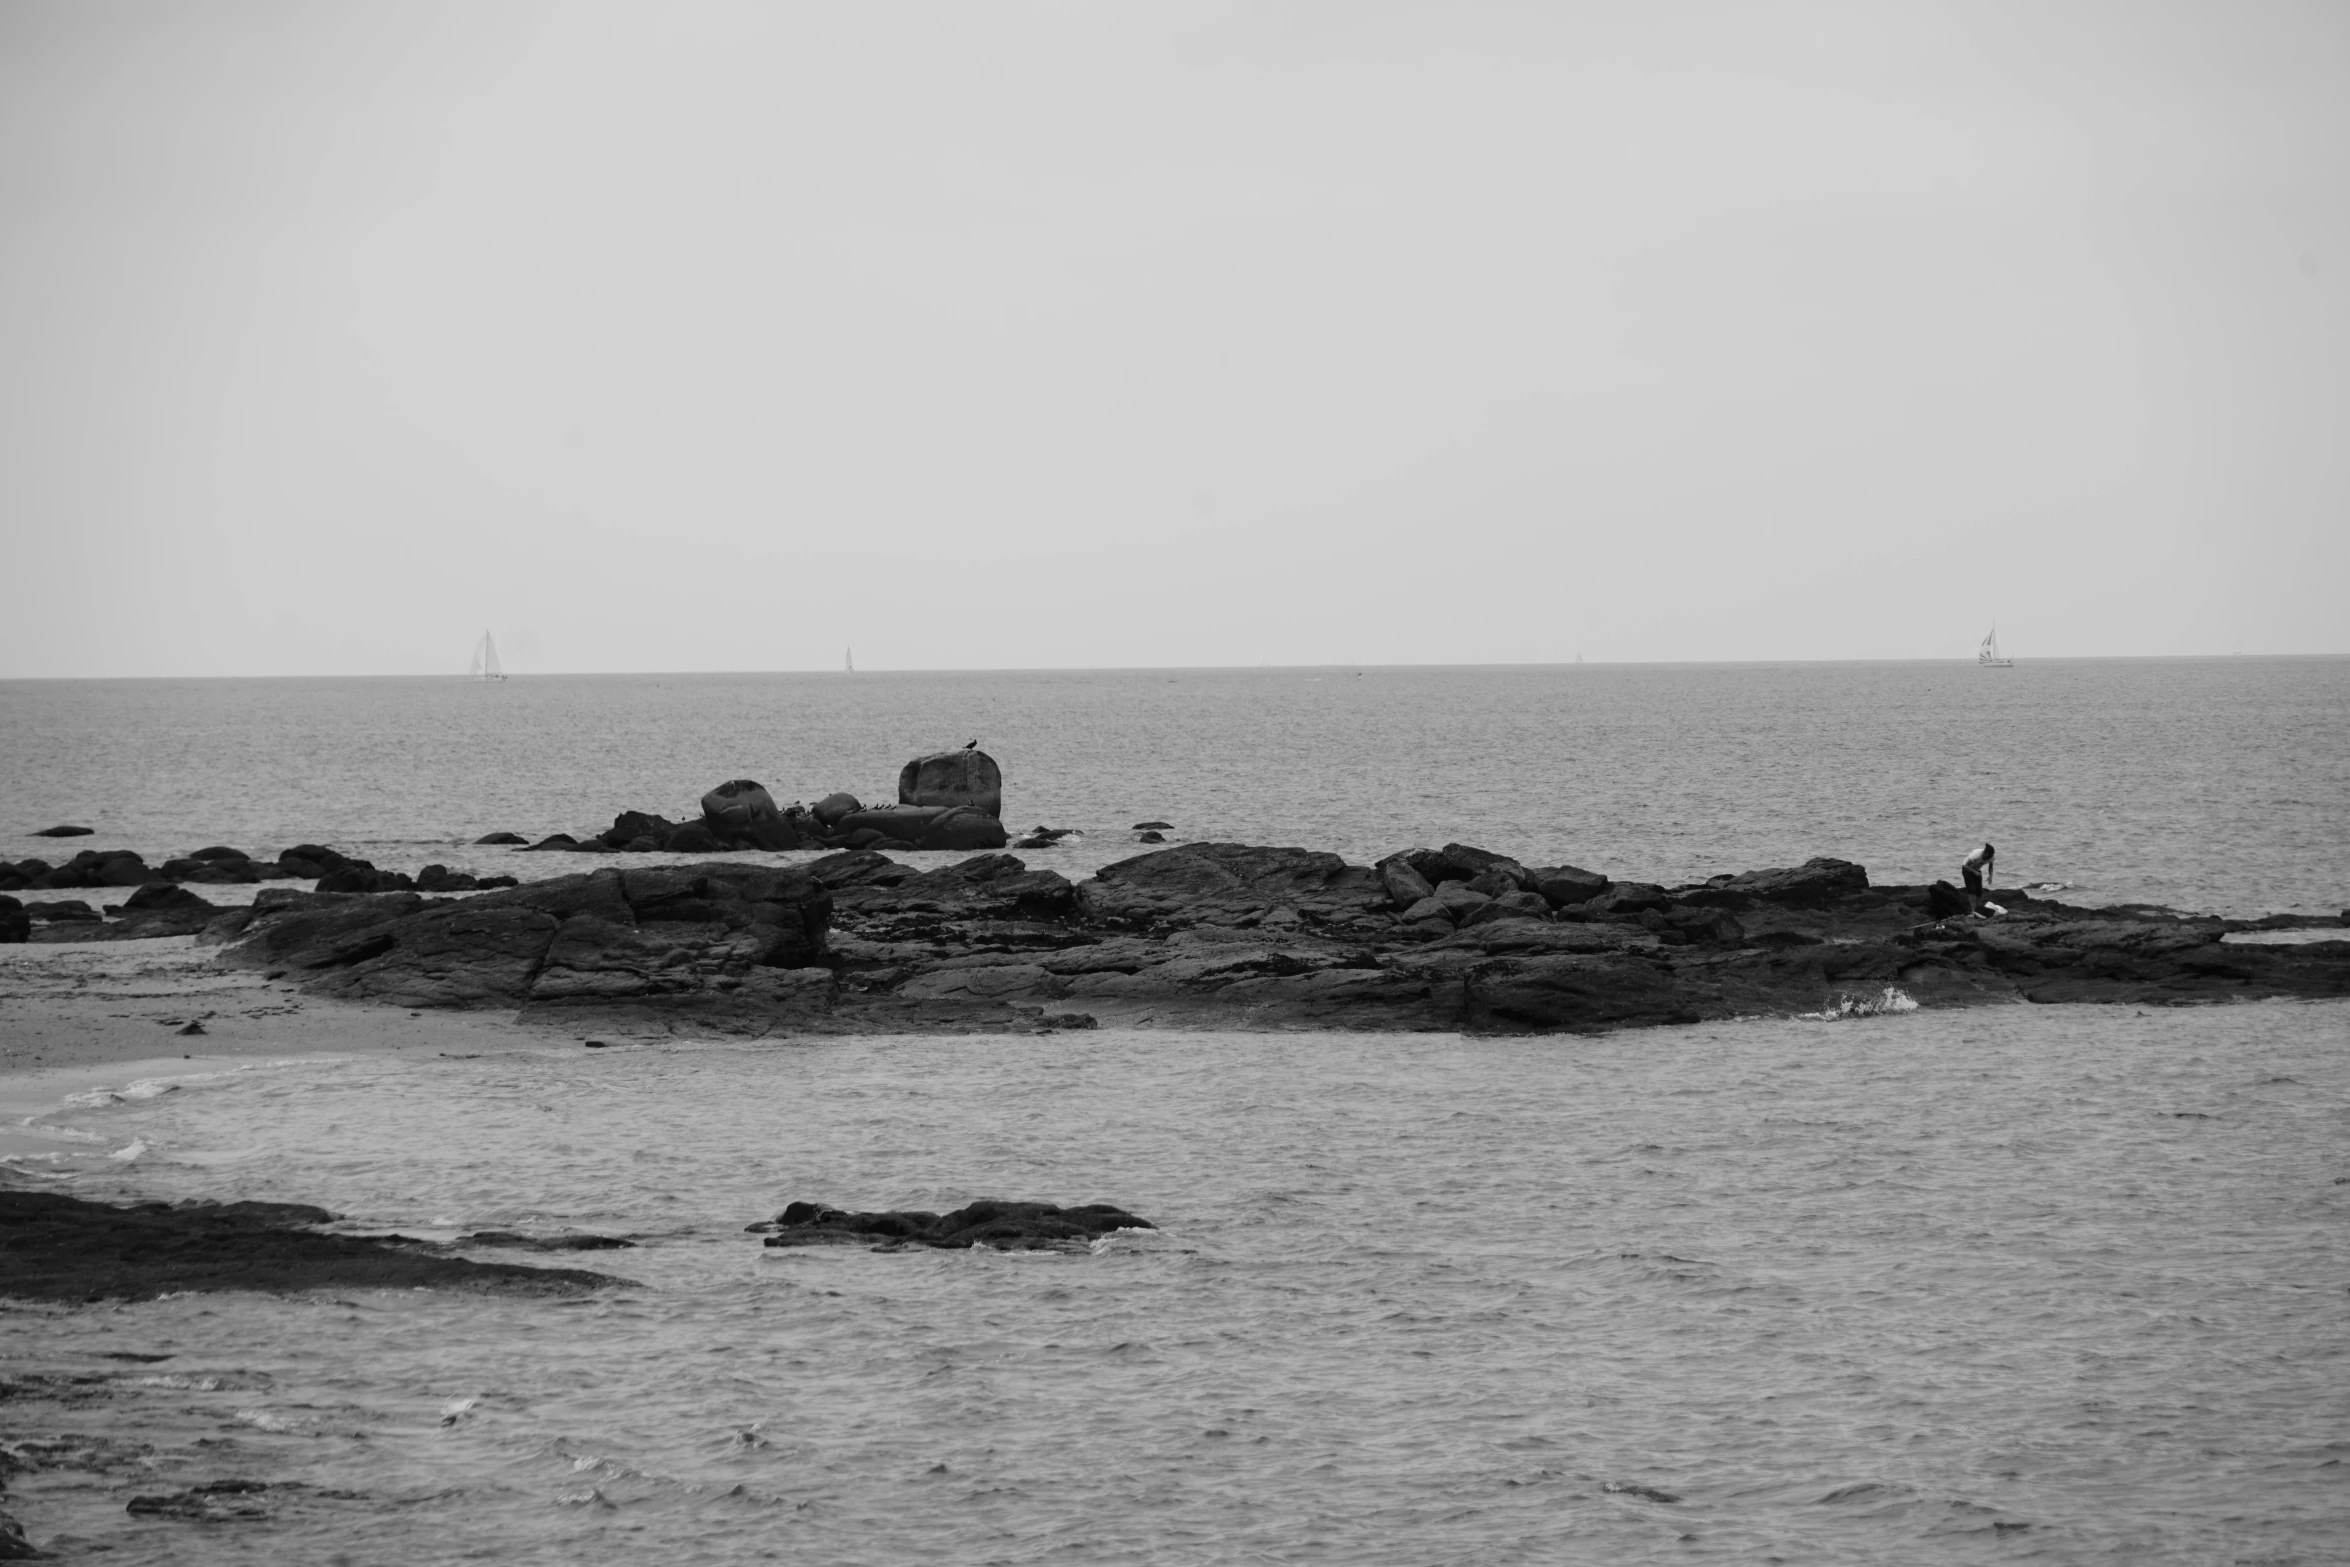 a man fishing off a small rocky island